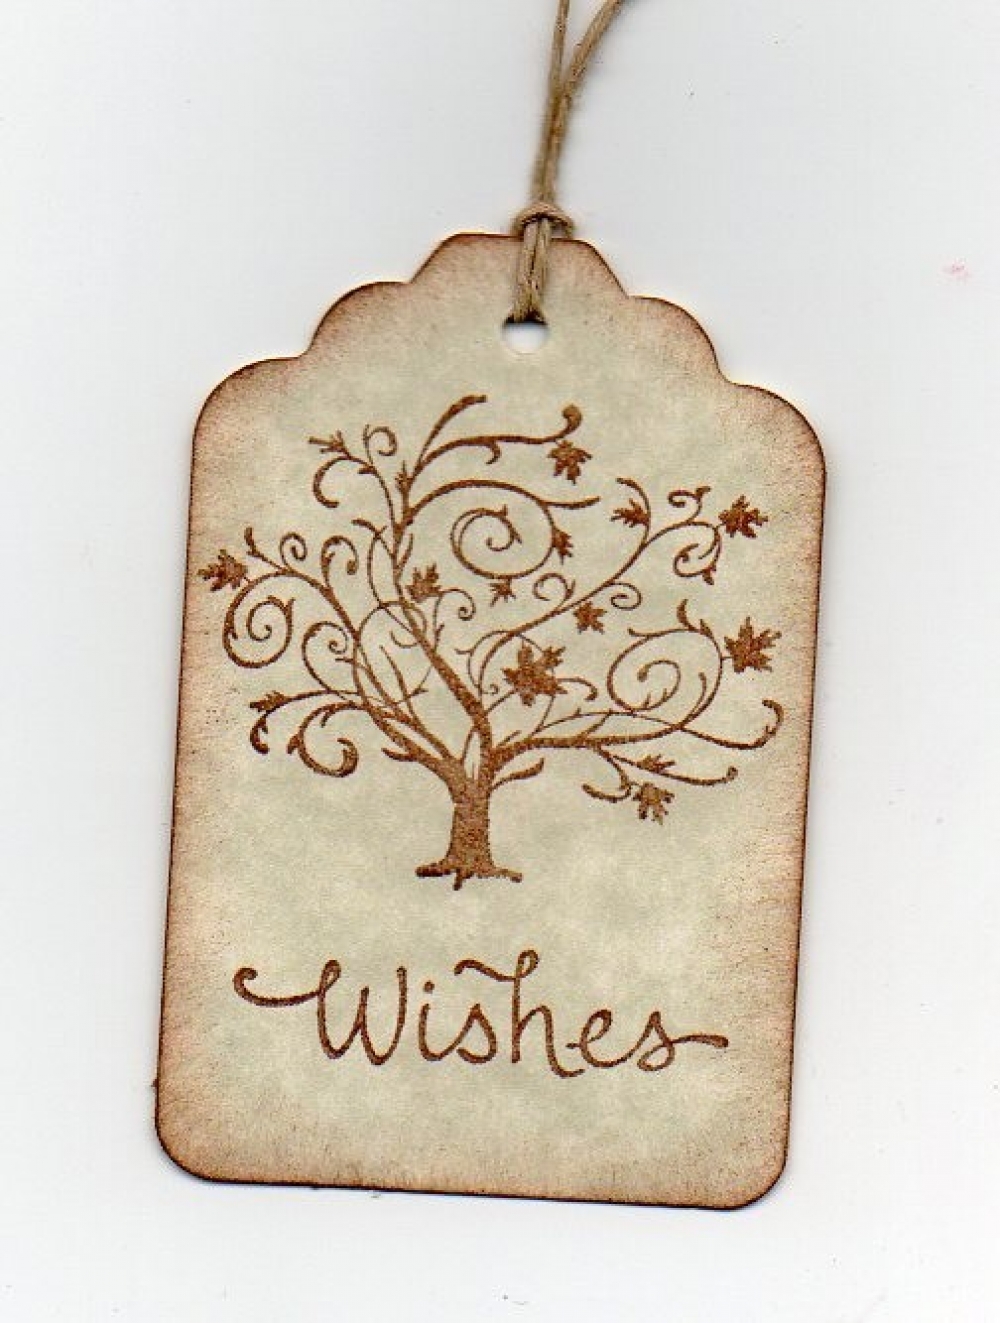 10 x Handmade Vintage Wishing Wish Tree Tags Wedding Advice with ribbon 